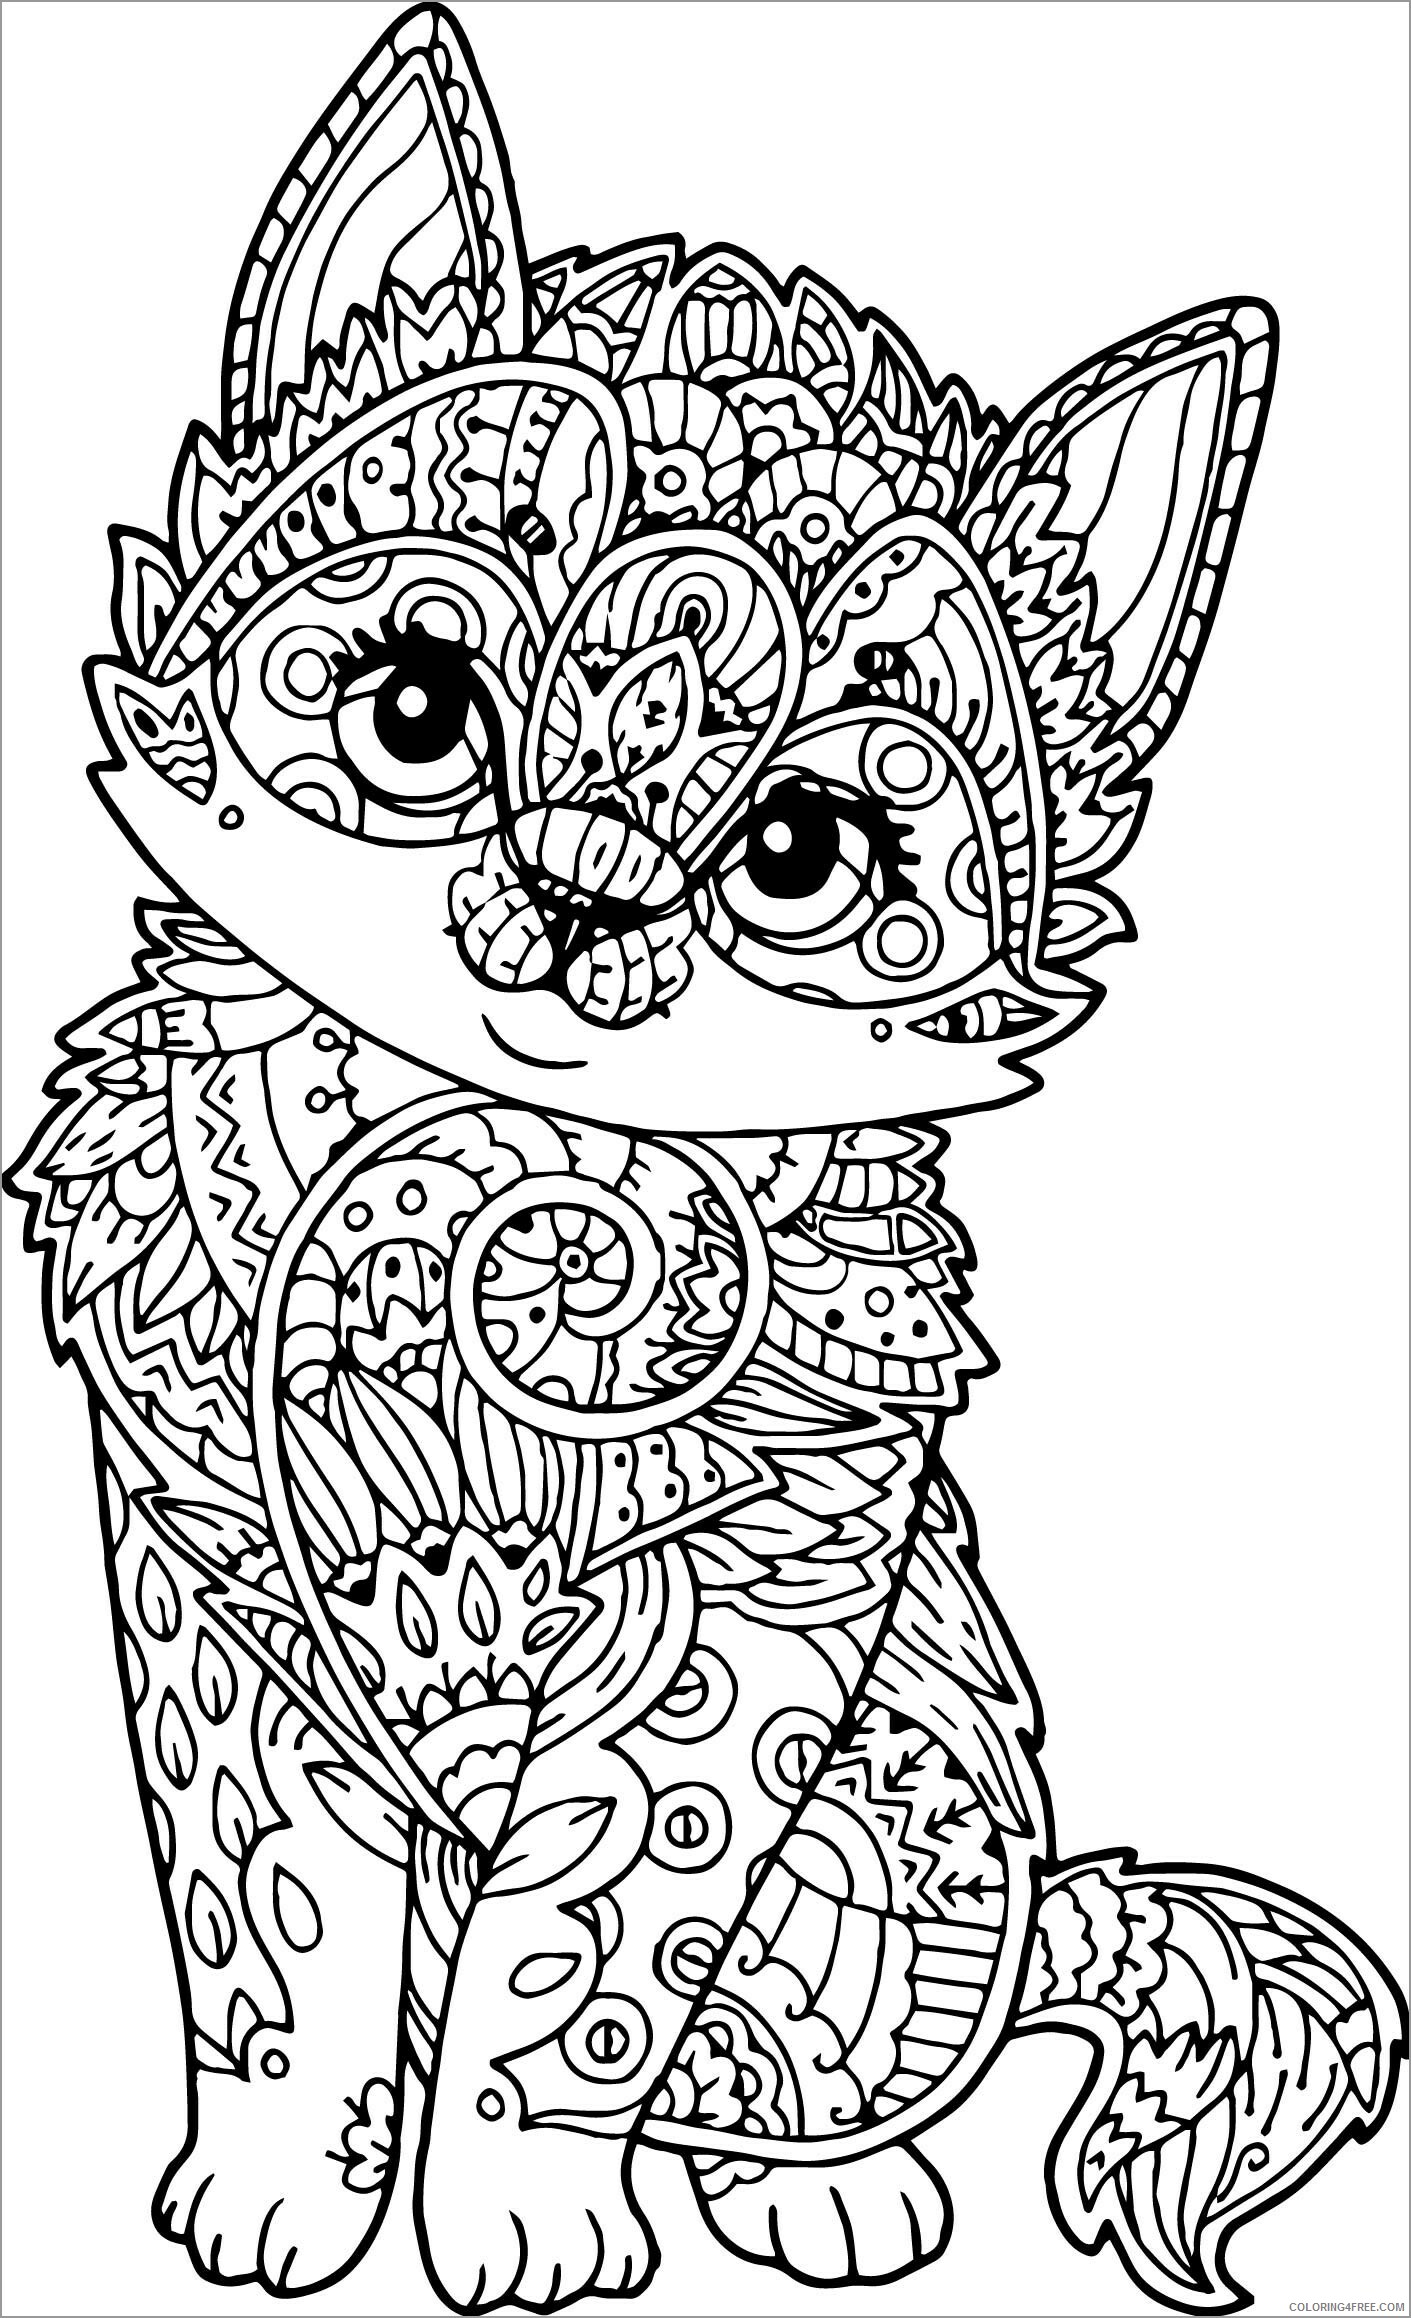 Kitten Coloring Pages Animal Printable Sheets mandala kitten 2021 3017 Coloring4free